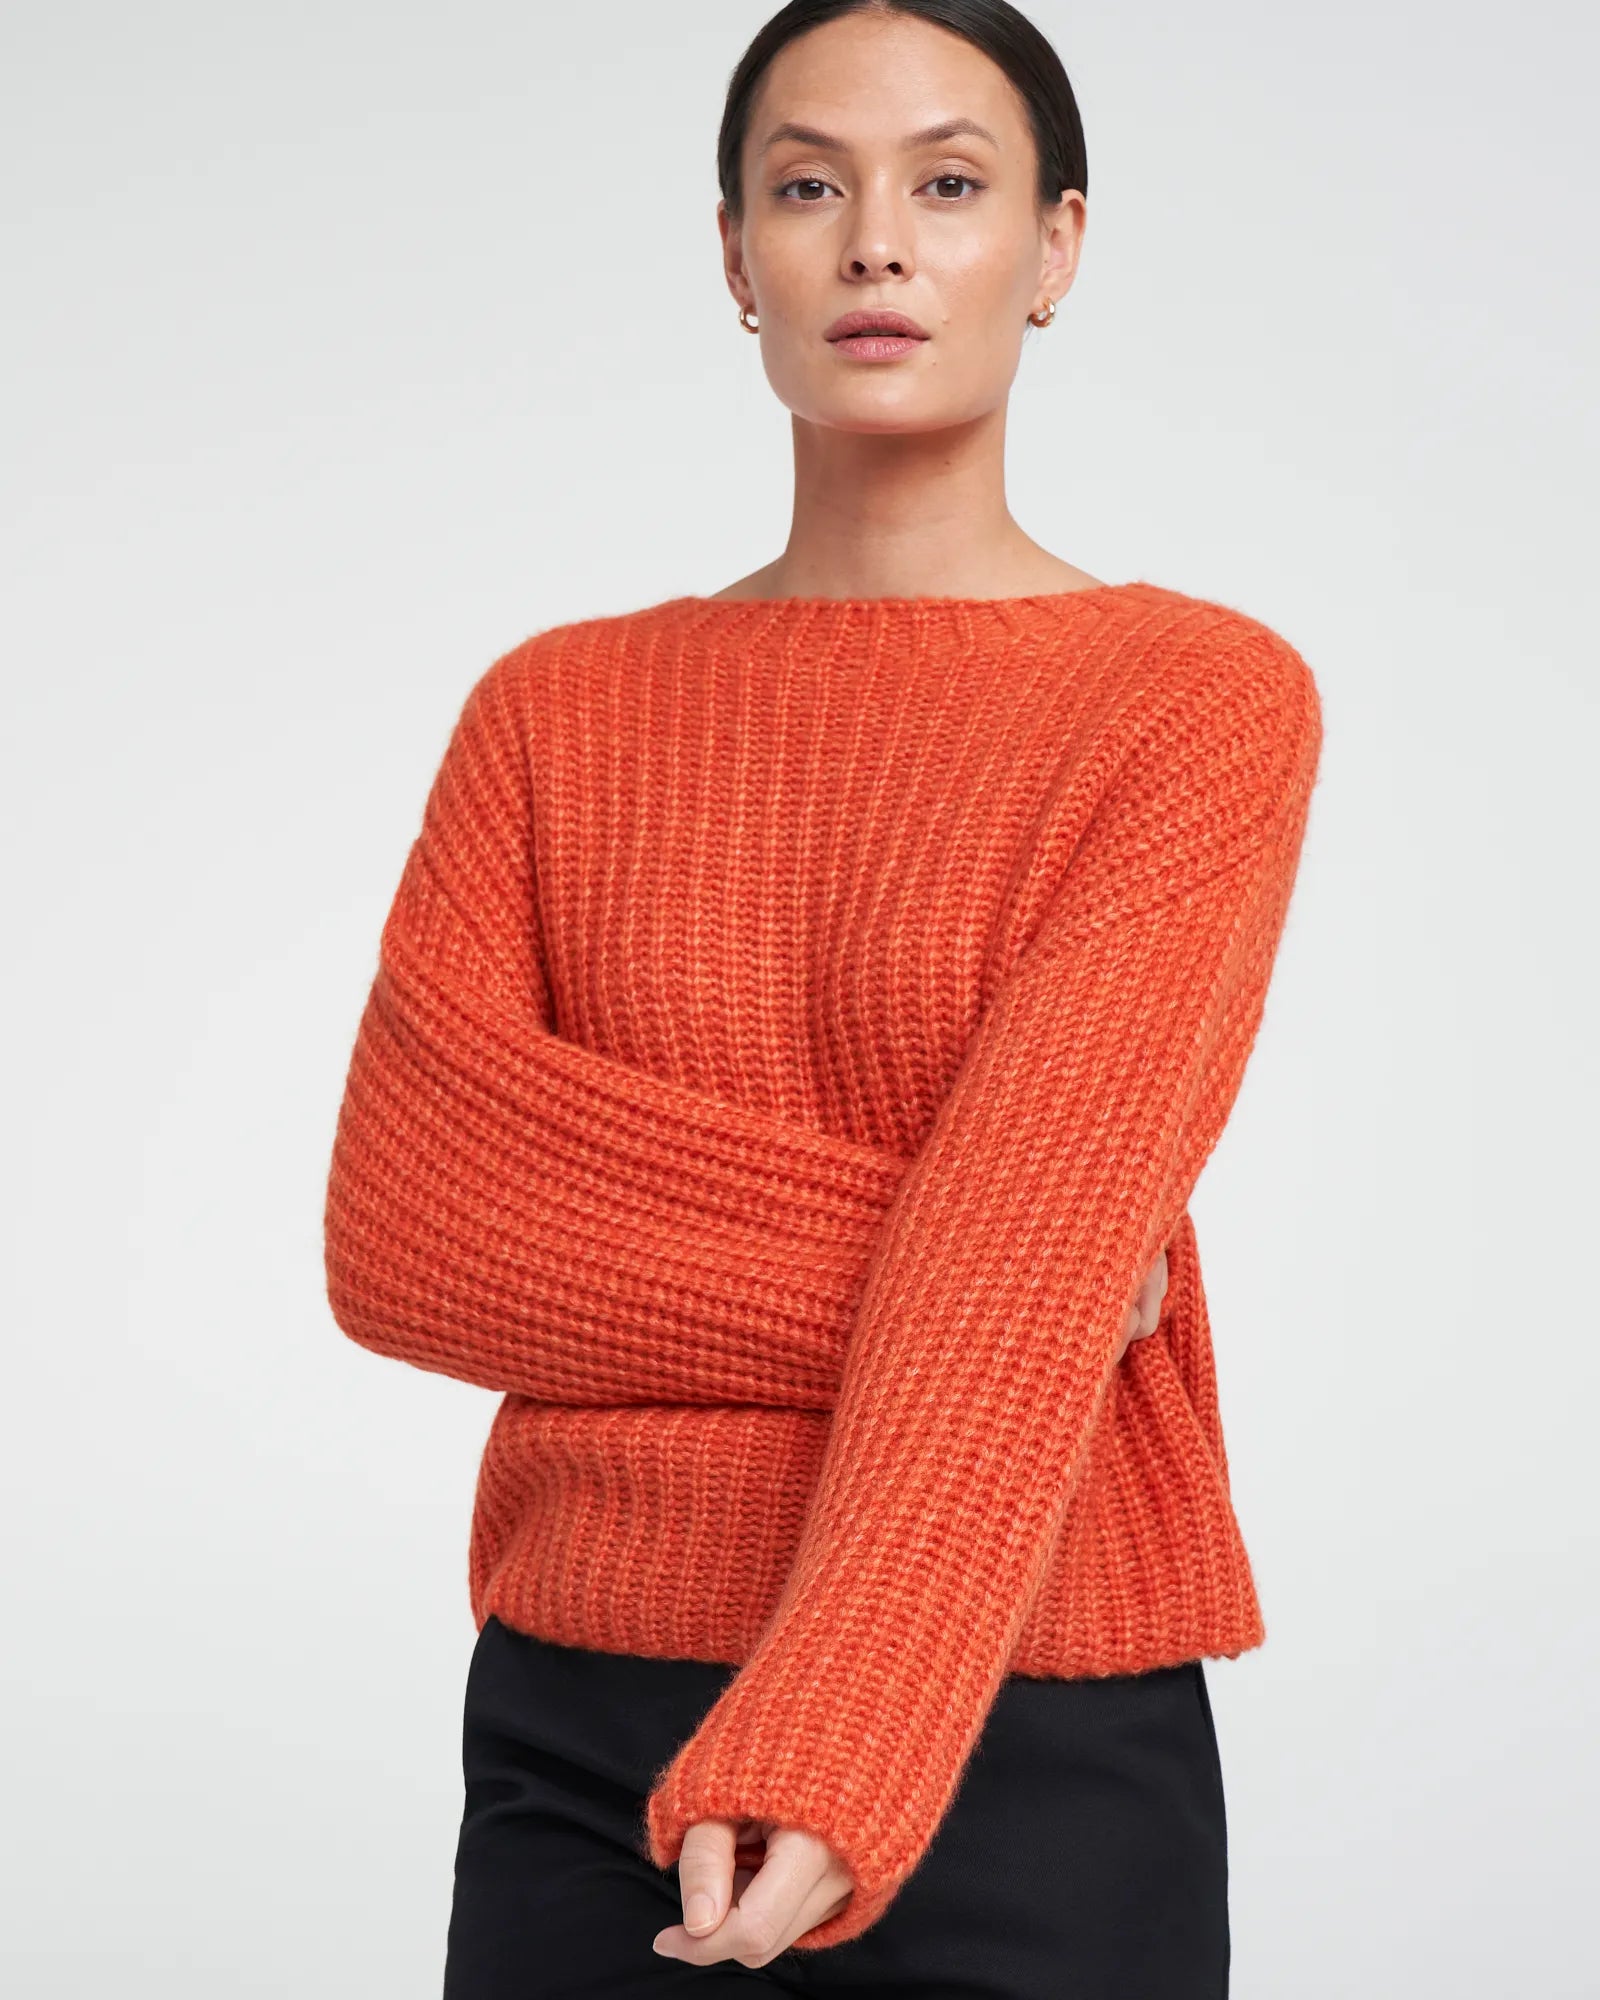 Cajsa Super Soft Knitted Sweater - Burnt Orange